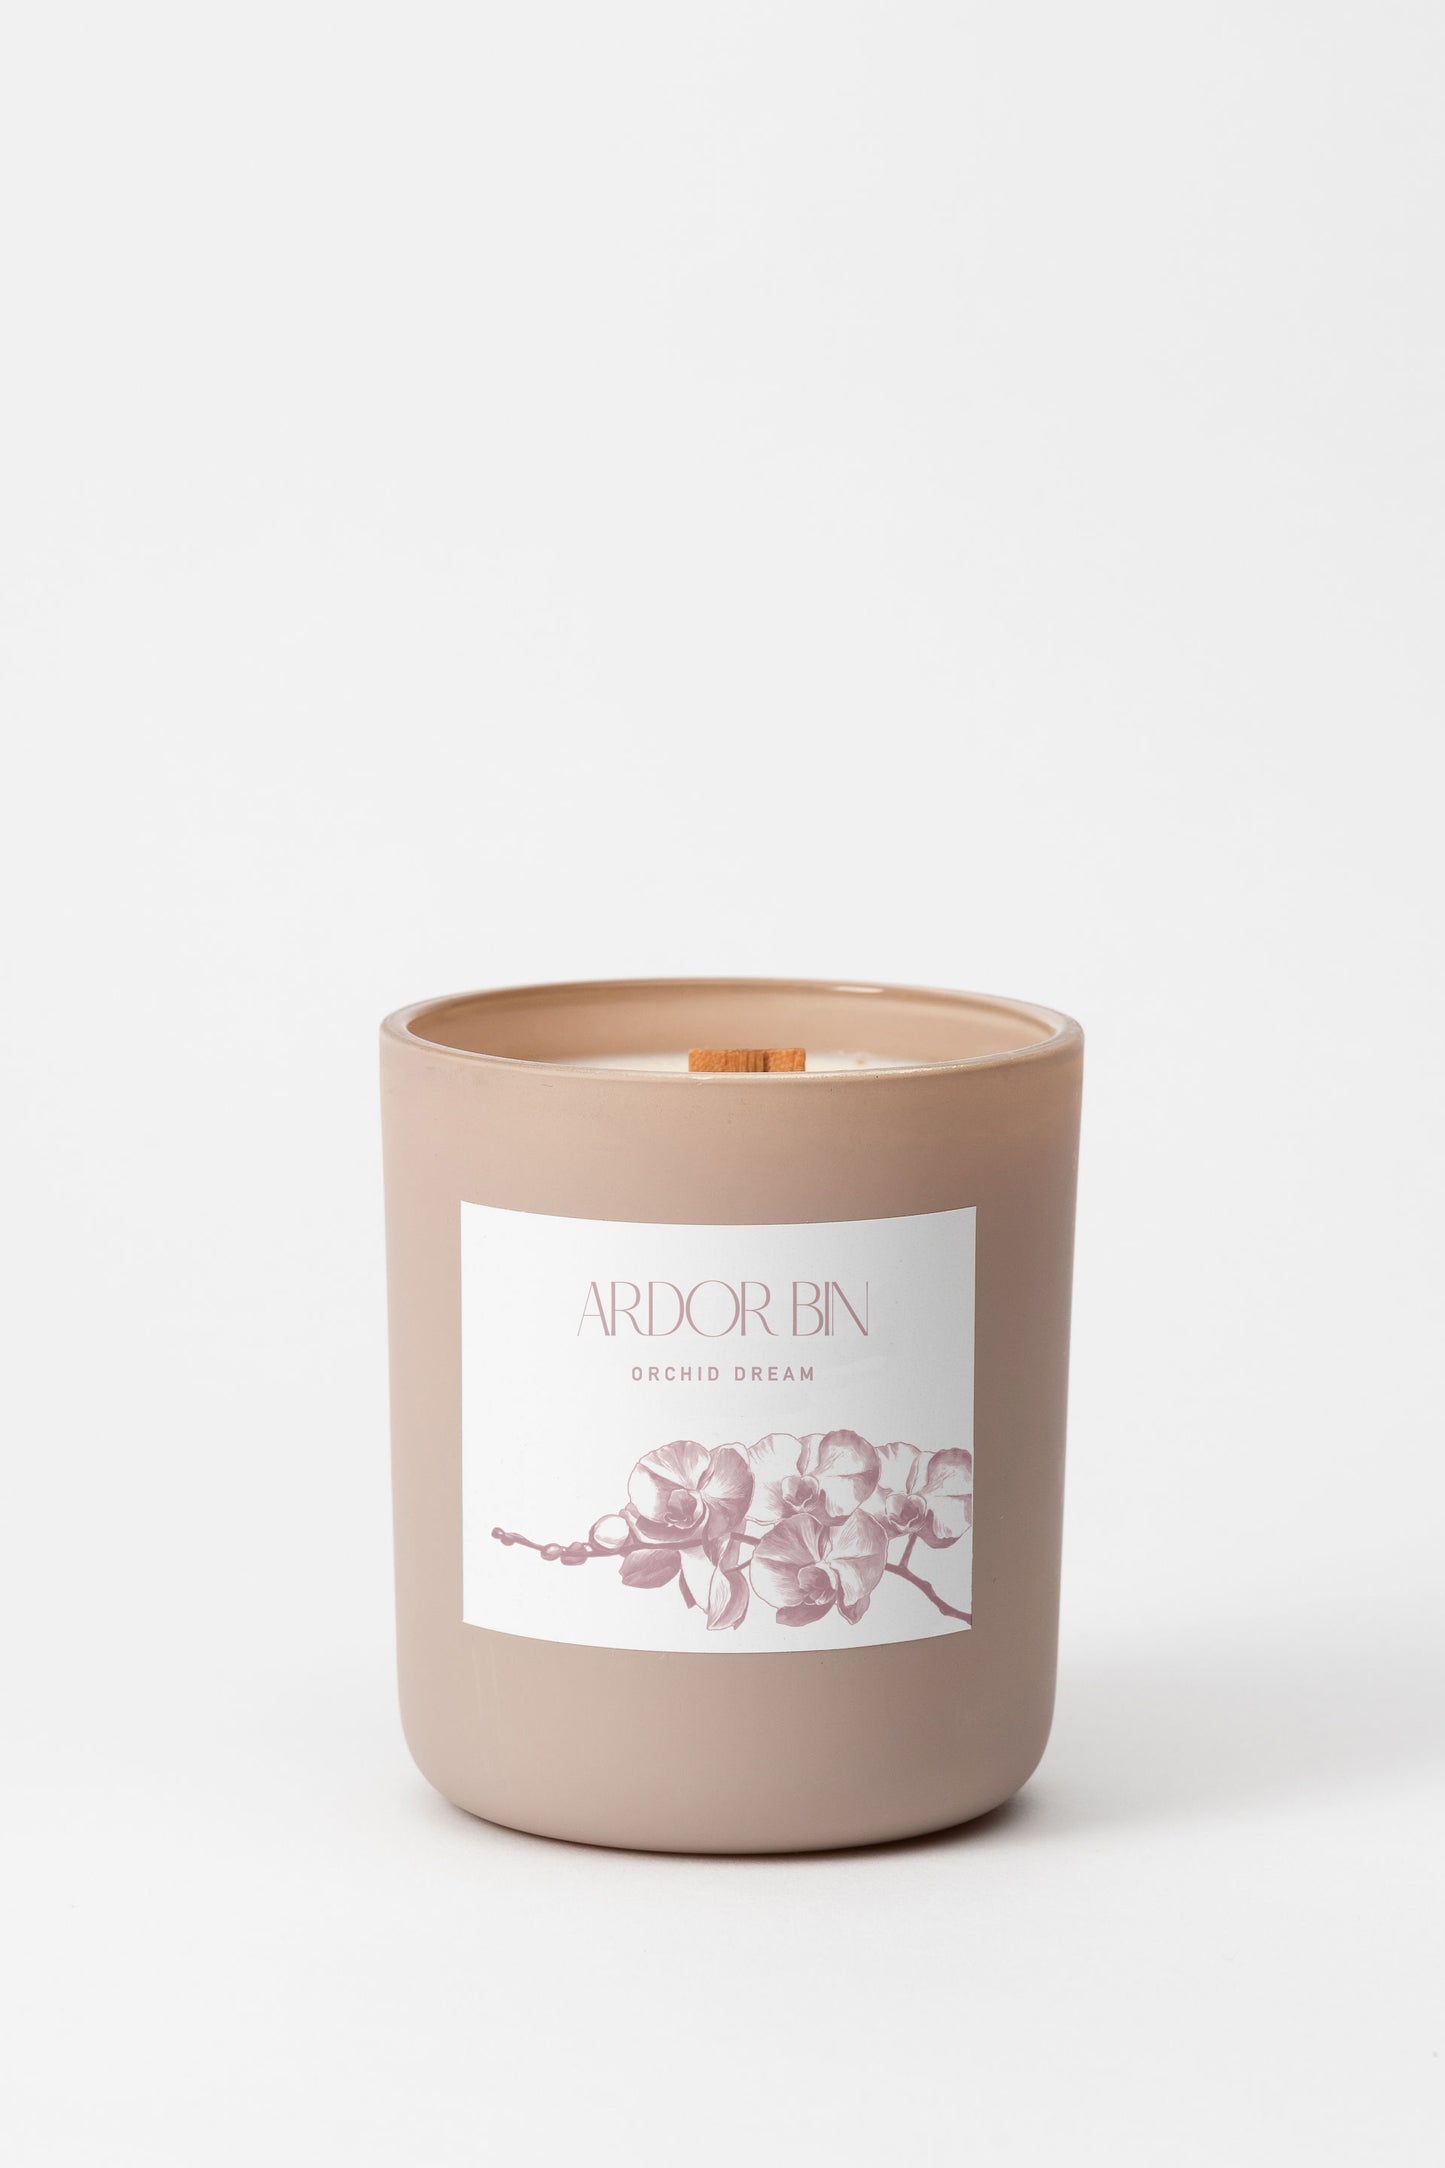 "Orchid Dream" Wood Wick Botanical Candle - Ardor Bin 